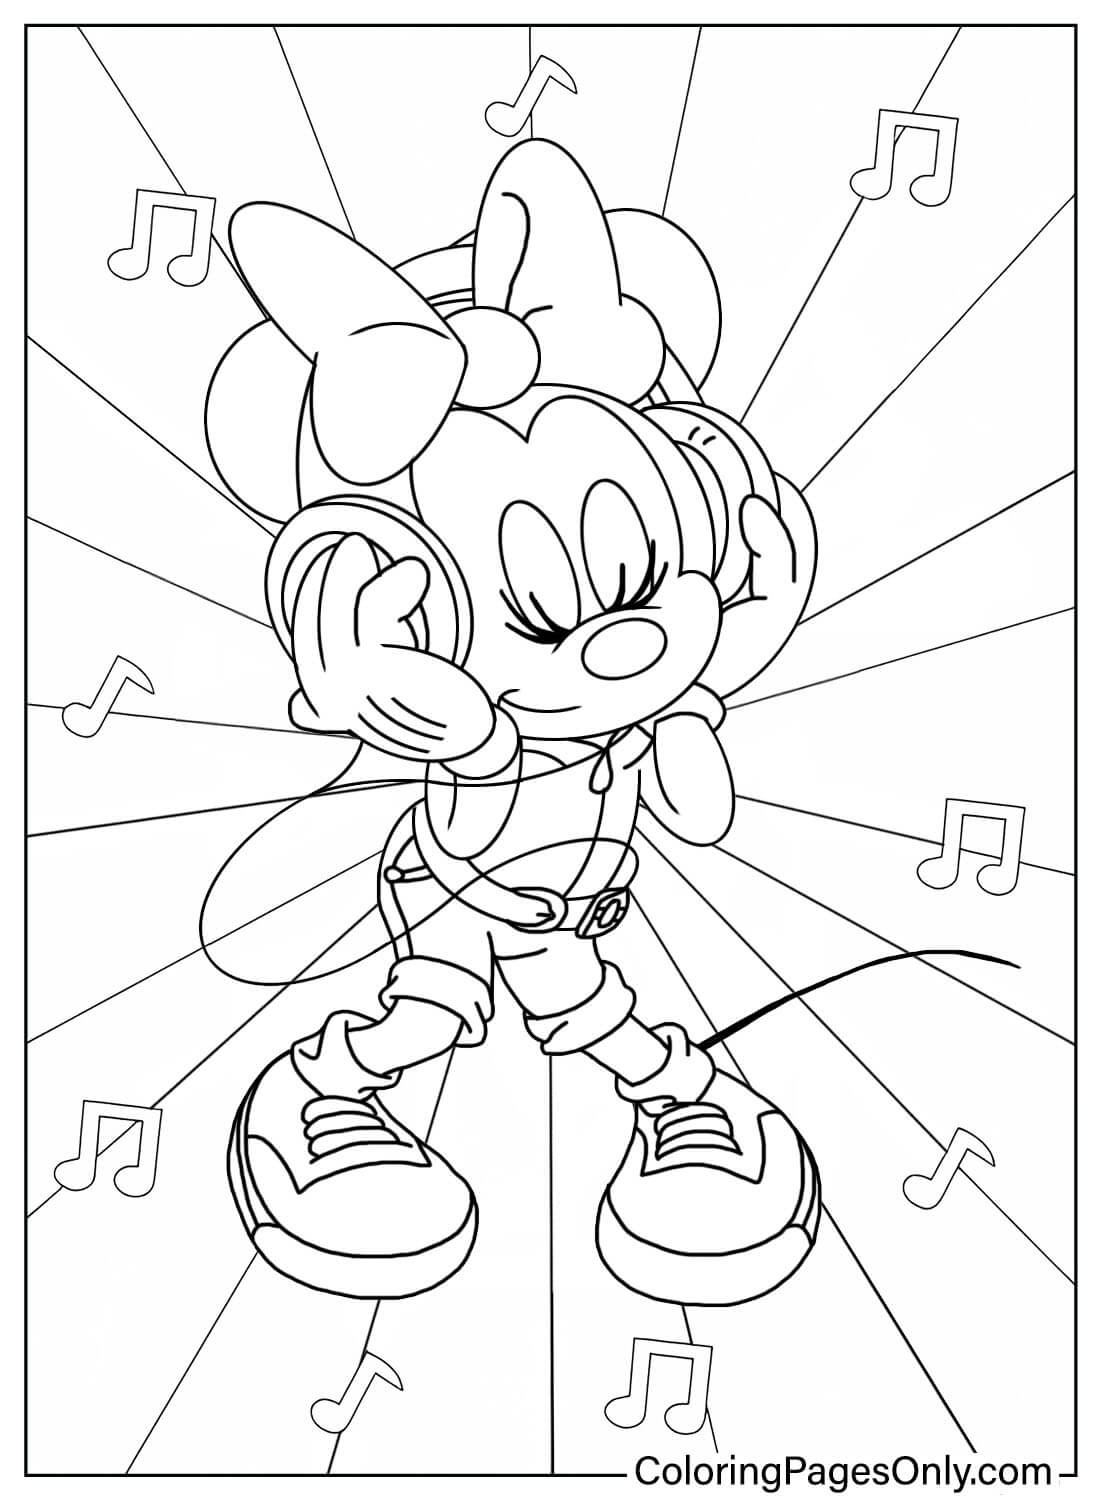 Kleurplaat Minnie luistert naar muziek van Minnie Mouse